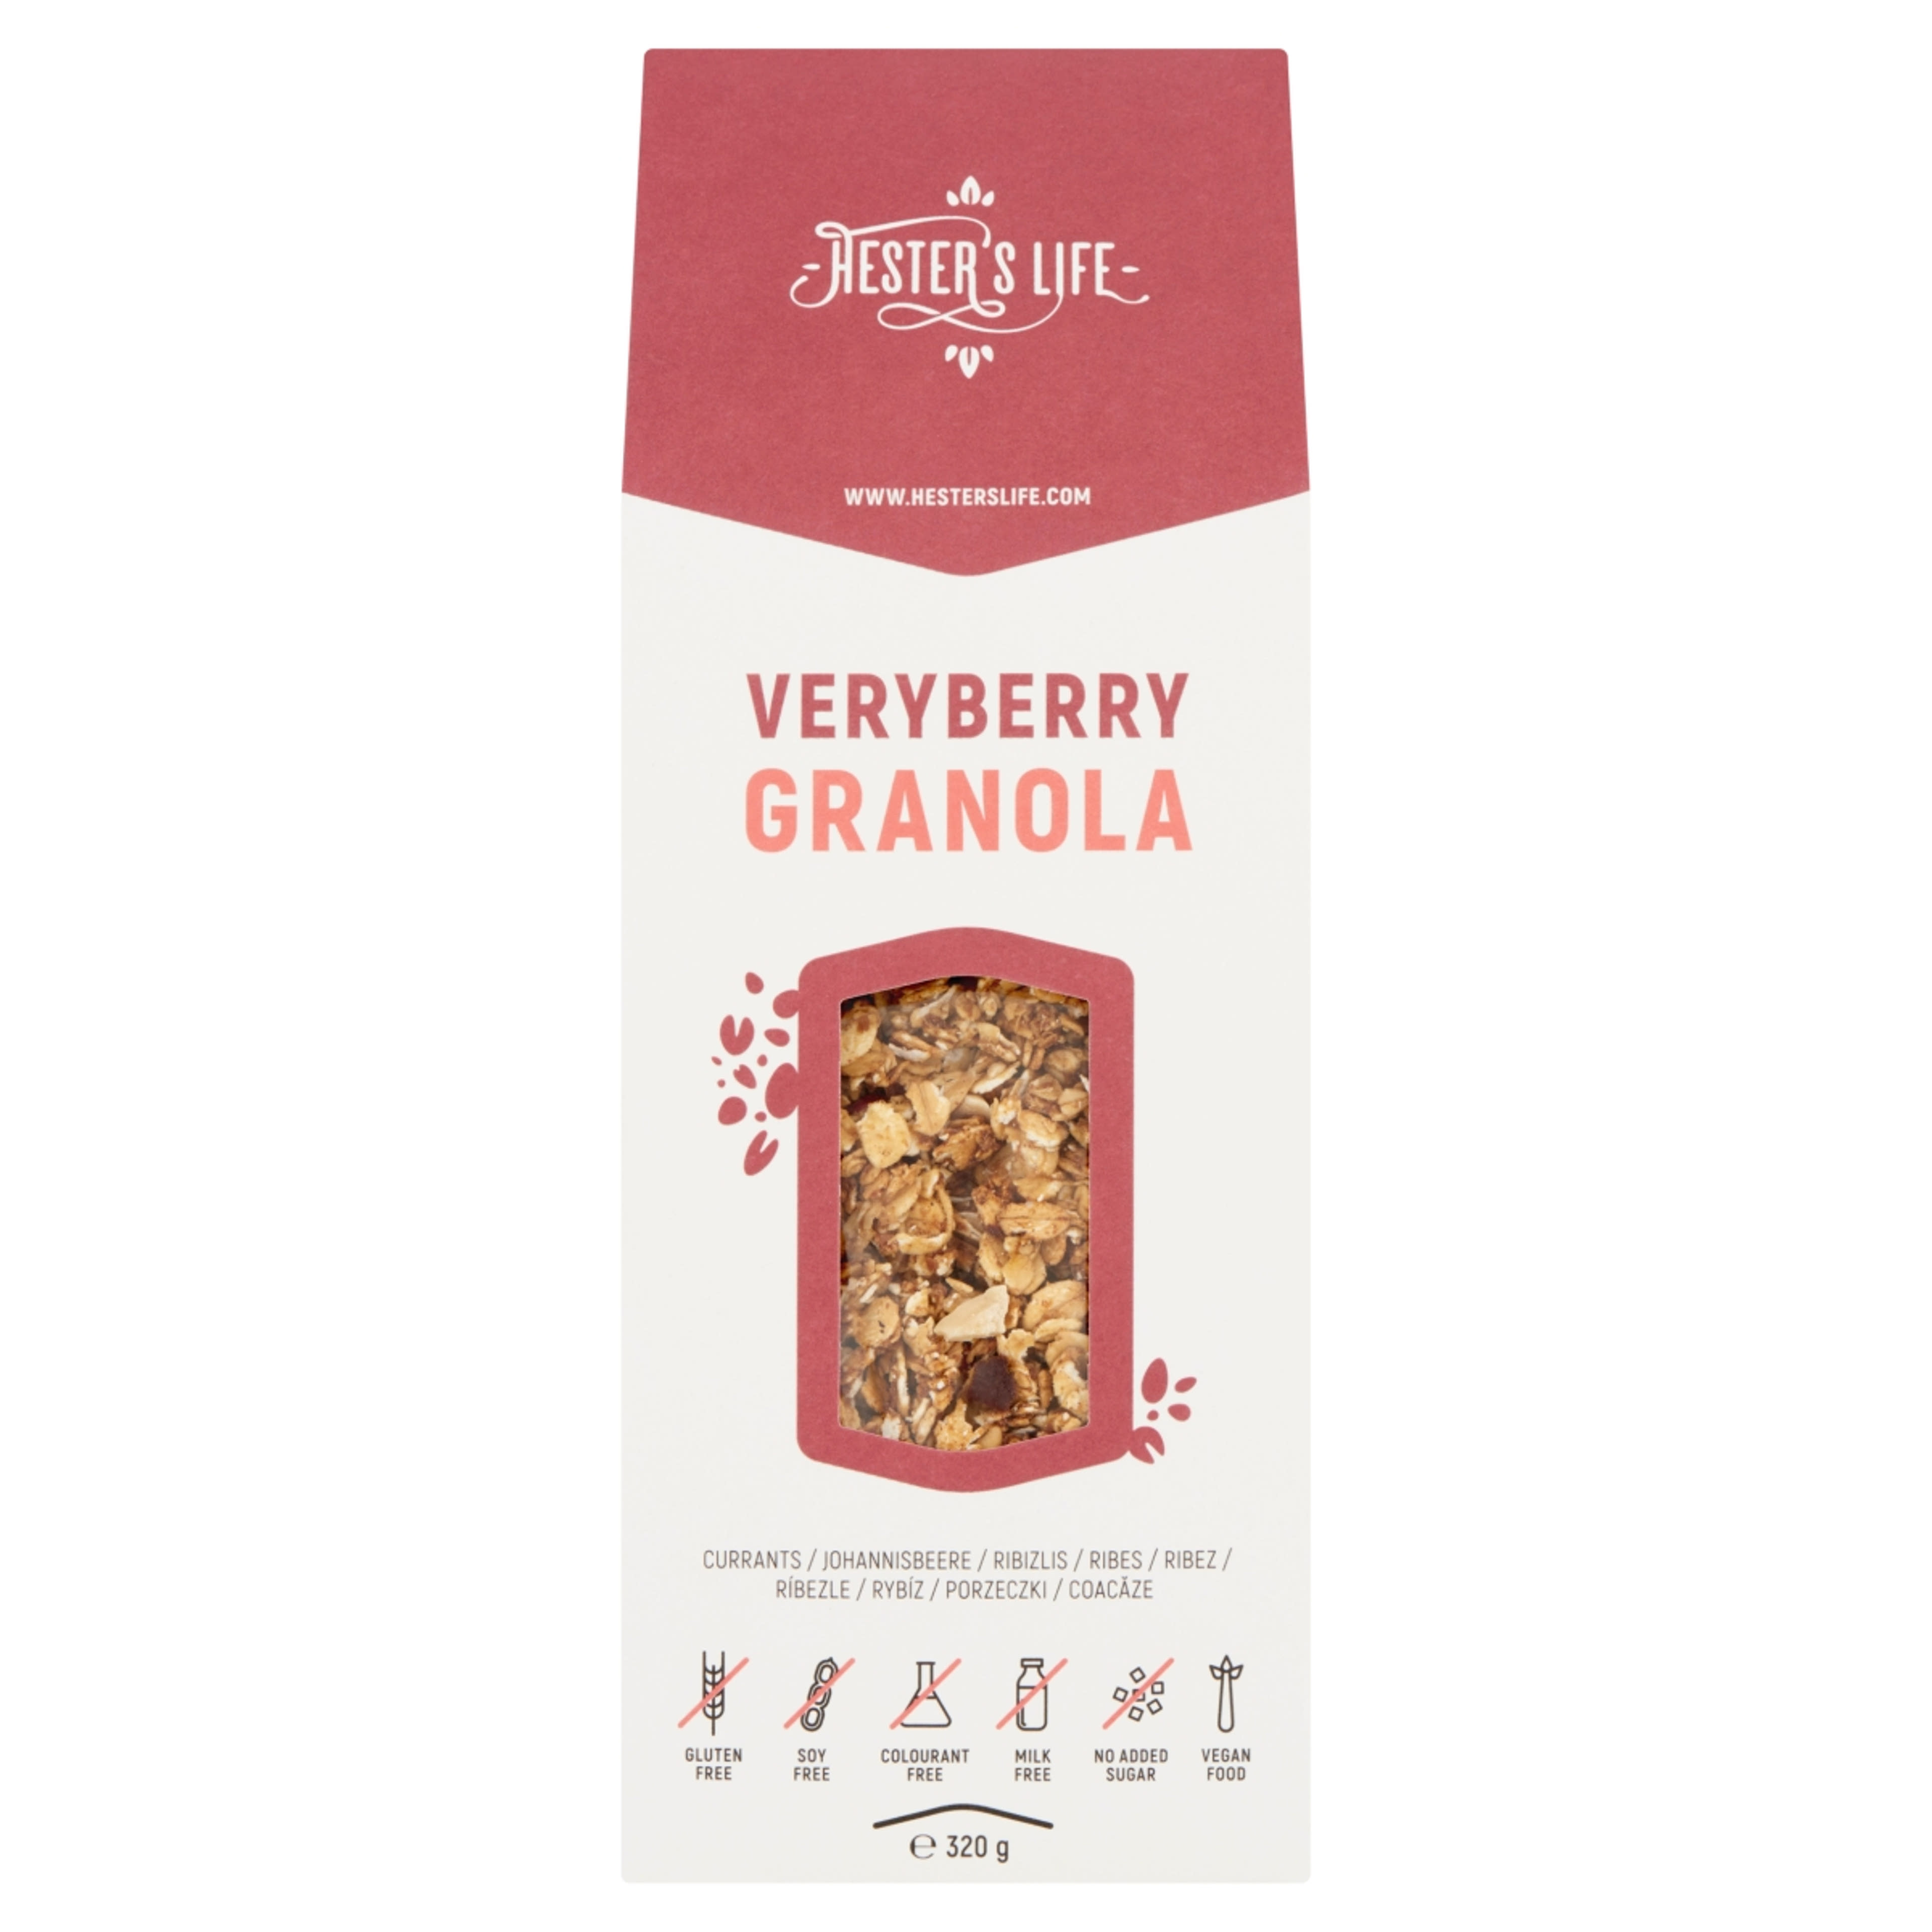 Hester's life veryberry granola - 320 g